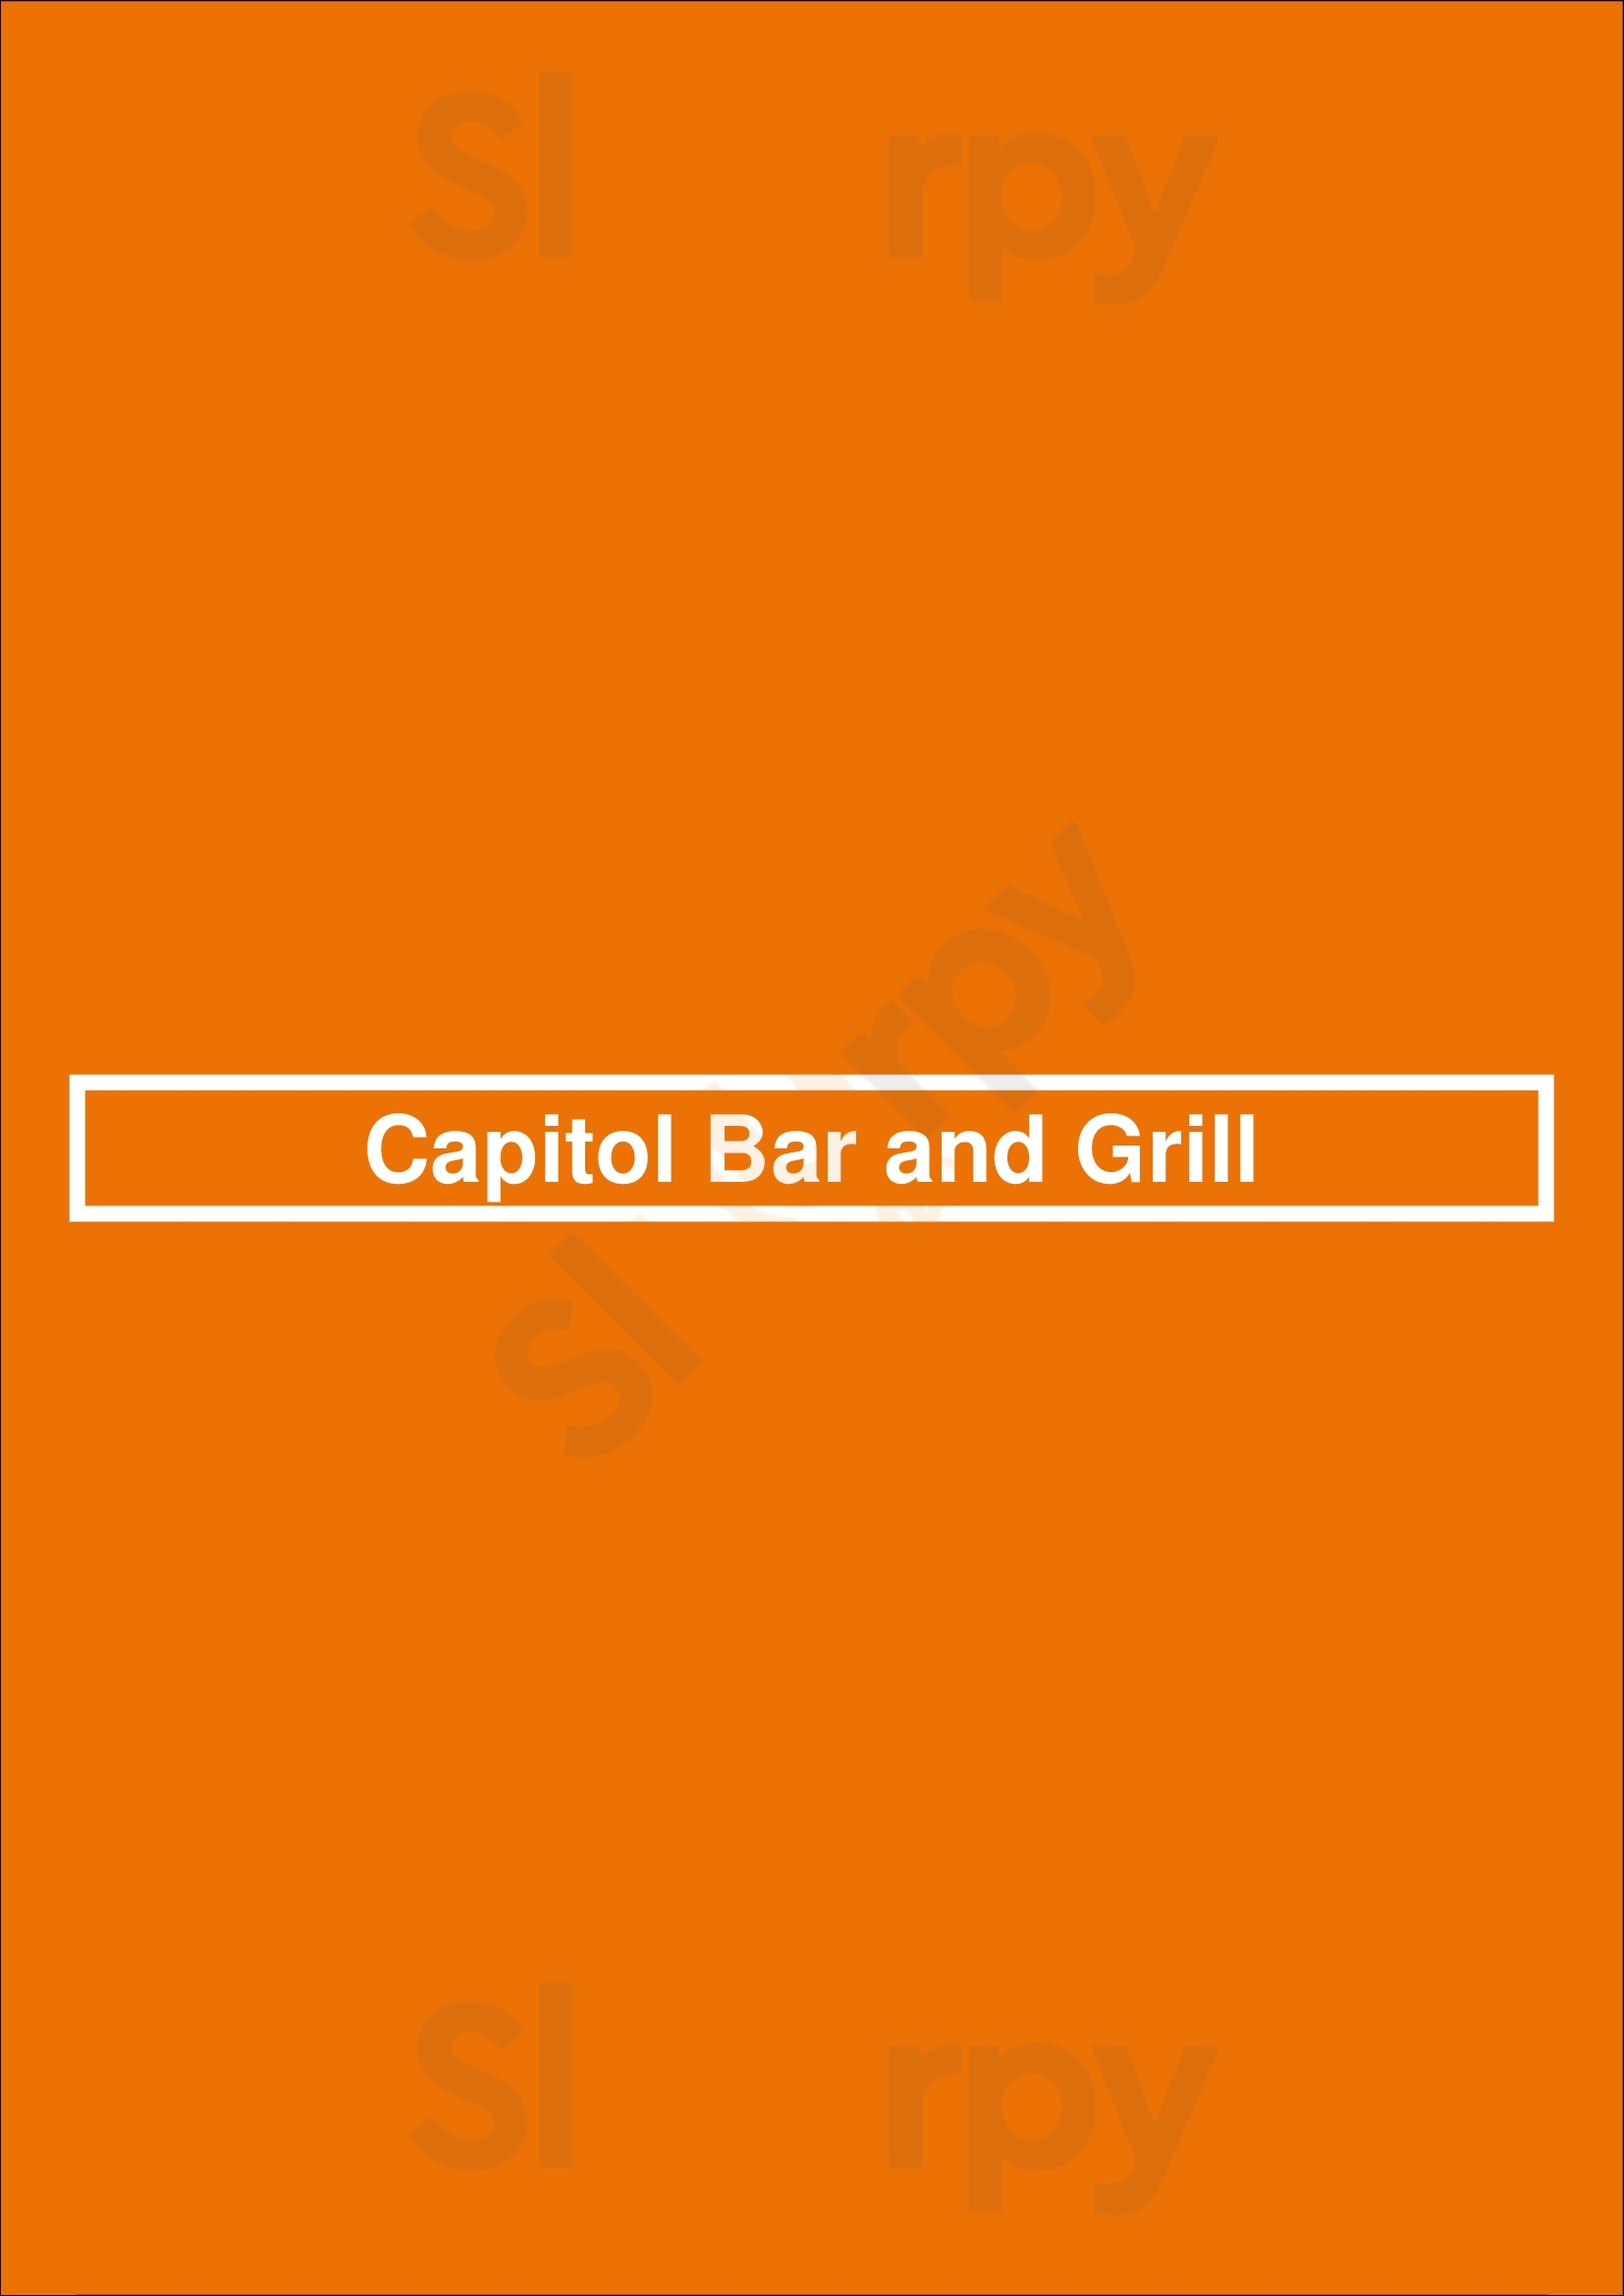 Capitol Bar & Grill Canberra Menu - 1